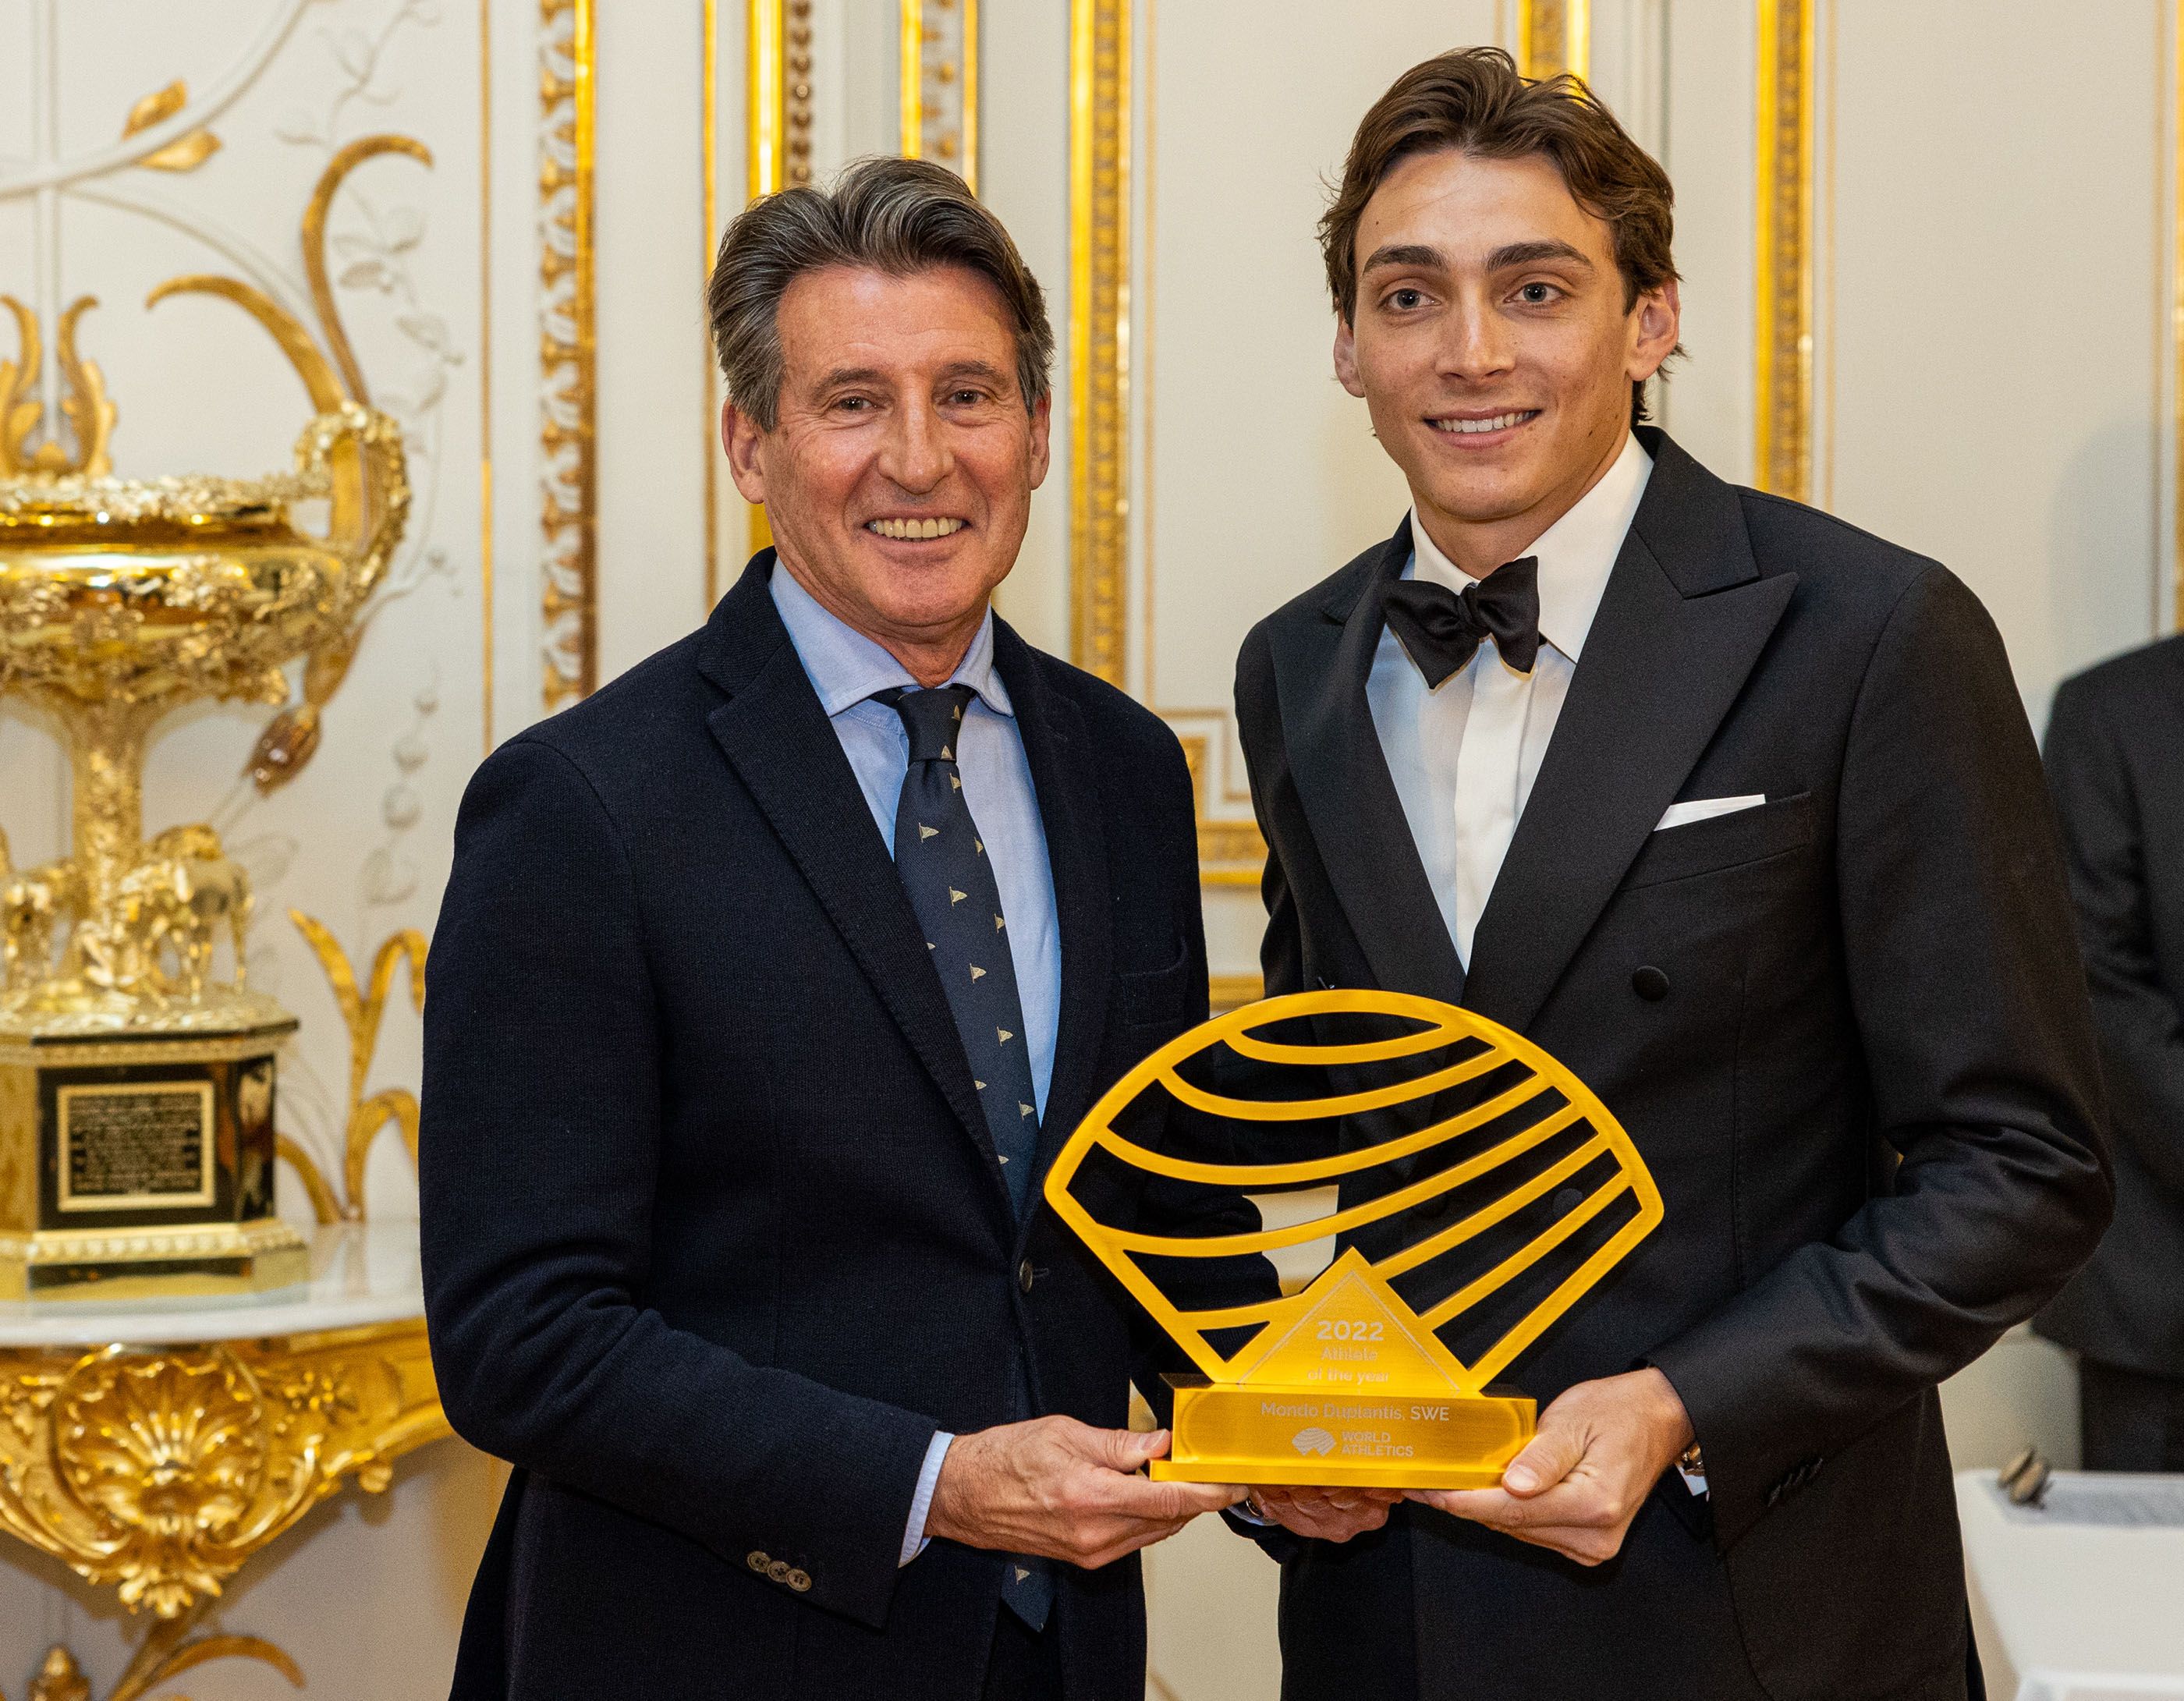 Mondo Duplantis receives his Athlete of the Year award from World Athletics President Sebastian Coe